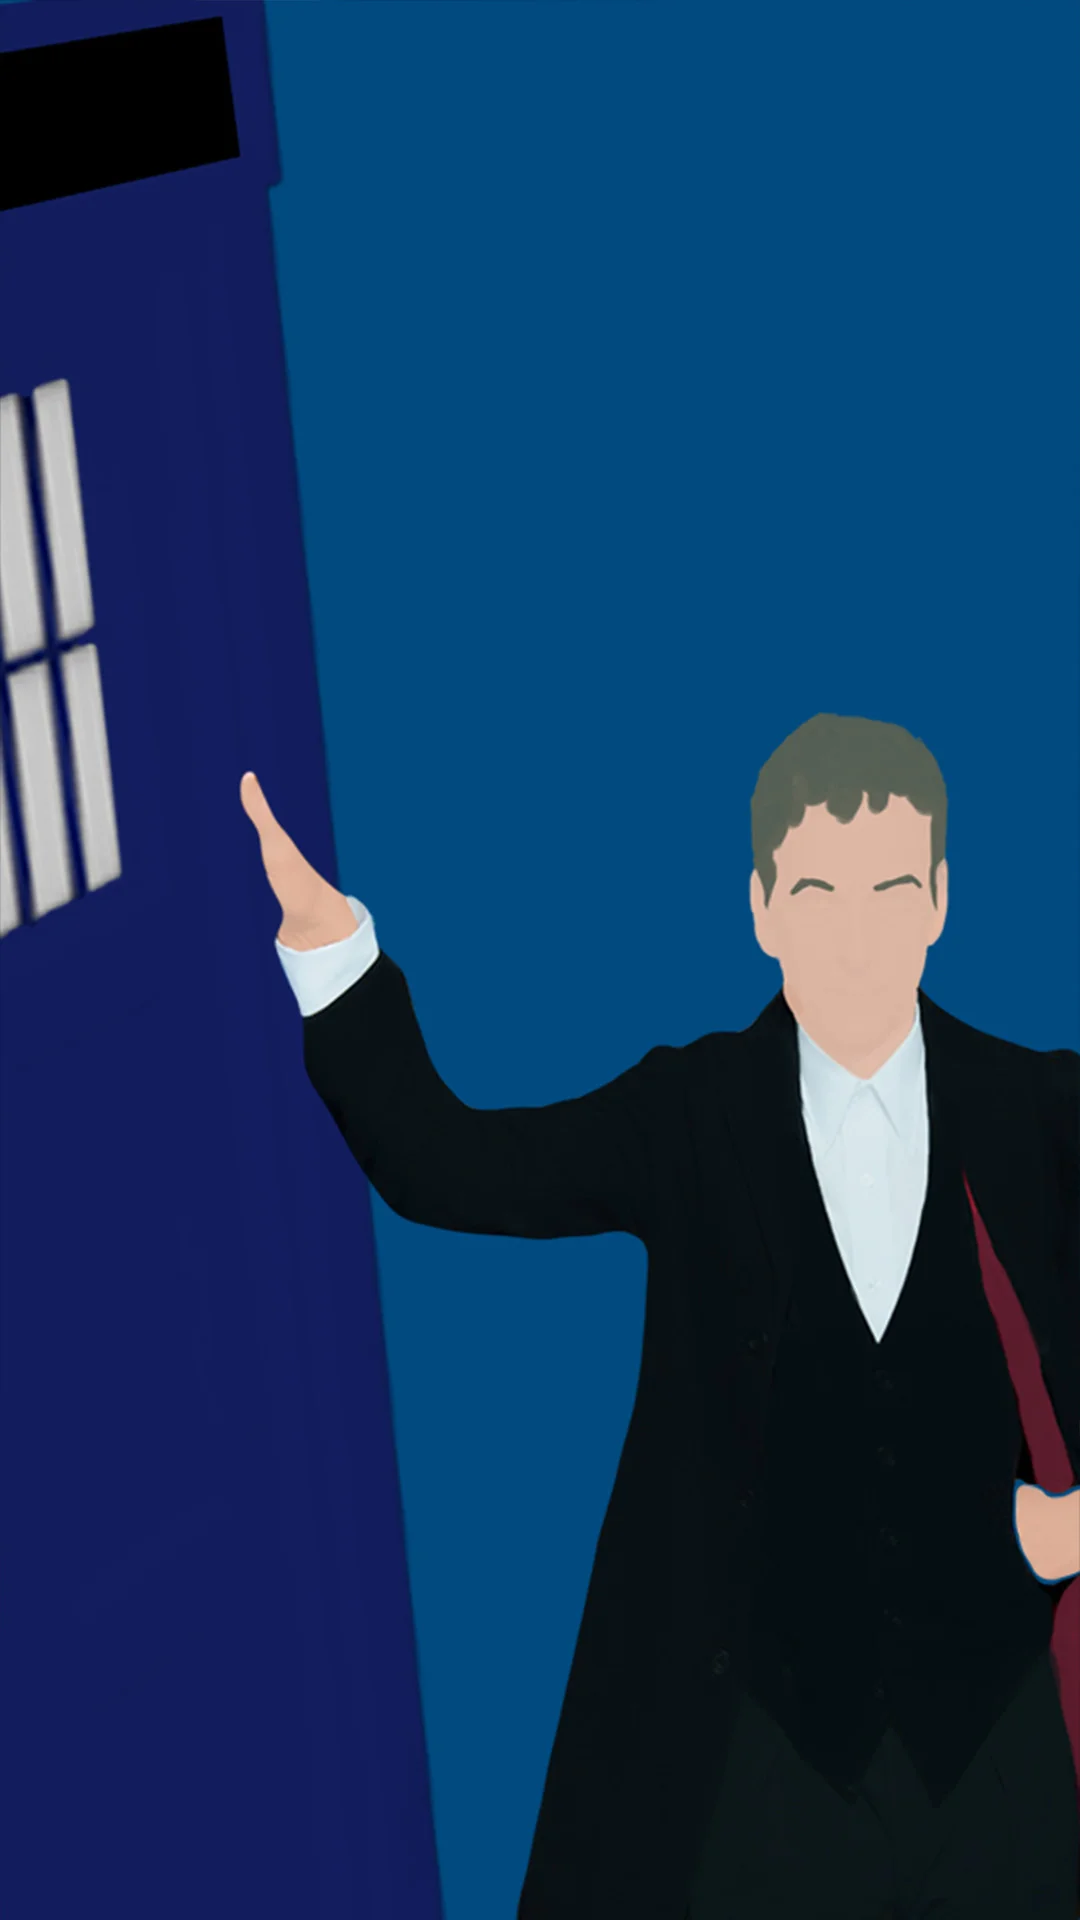 These minimalistic Season 8 Doctor Who wallpapers yBaX START